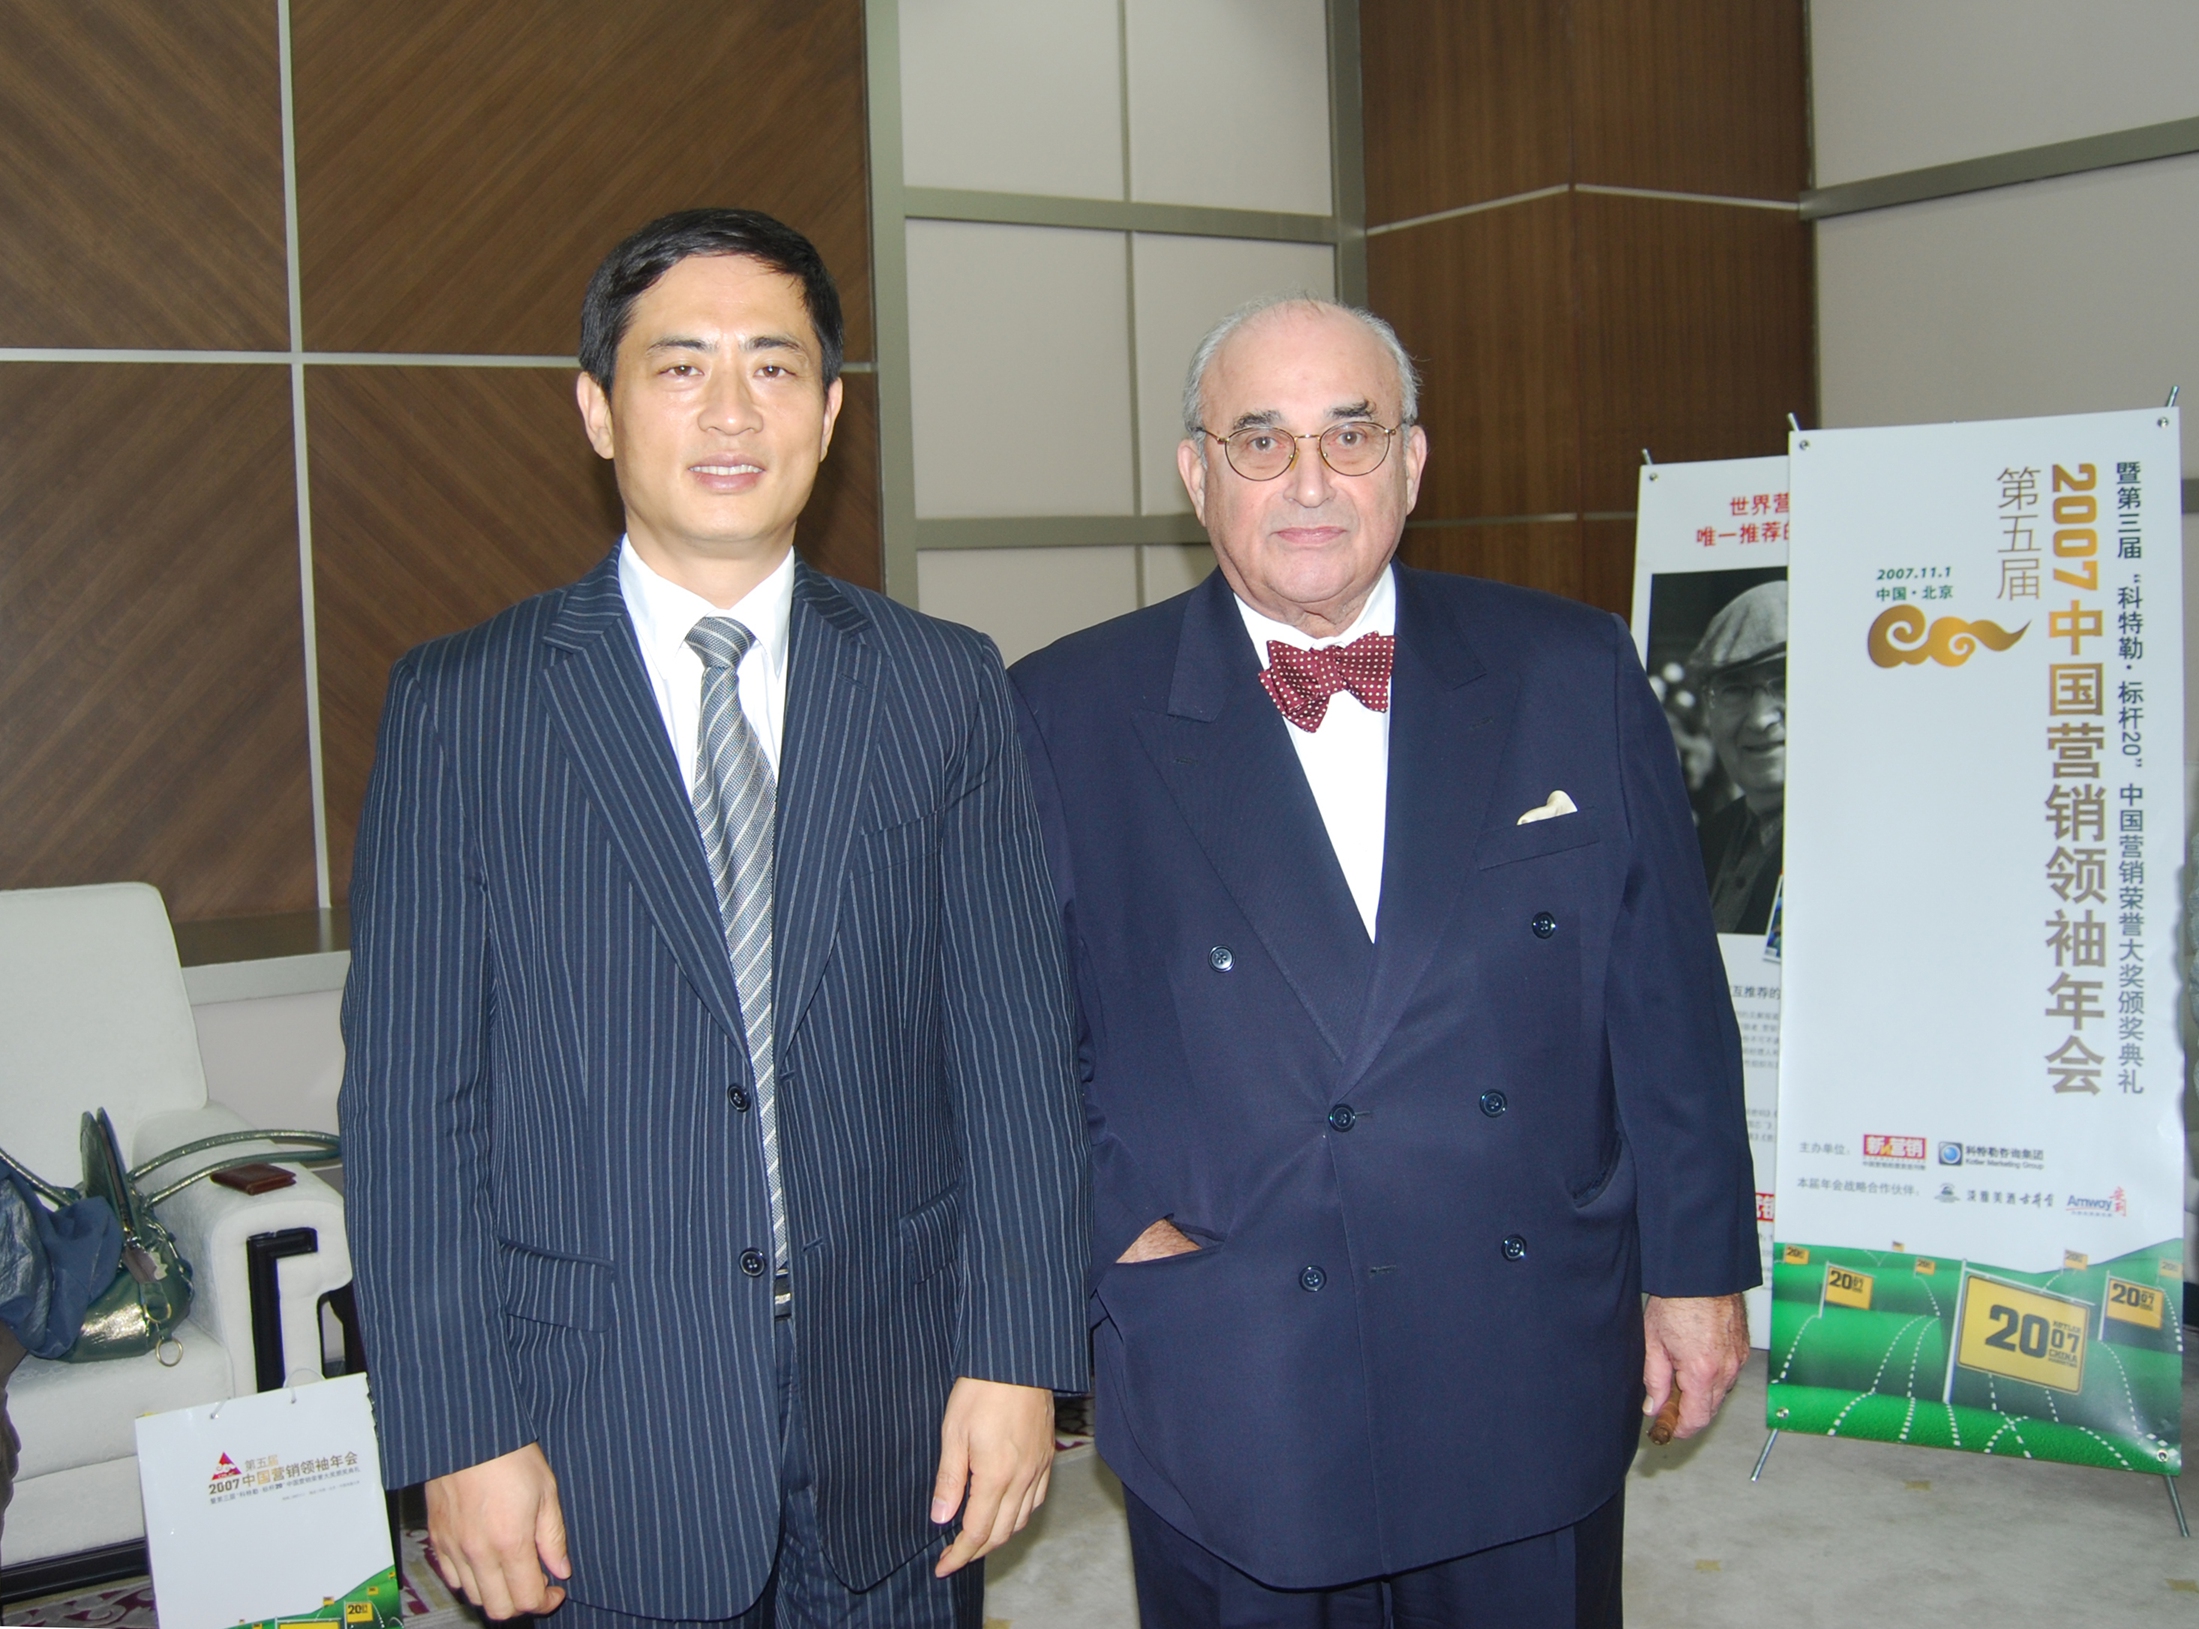 President Bin Chen (left) and global marketing guru Milton Kotler (right) posing for a picture